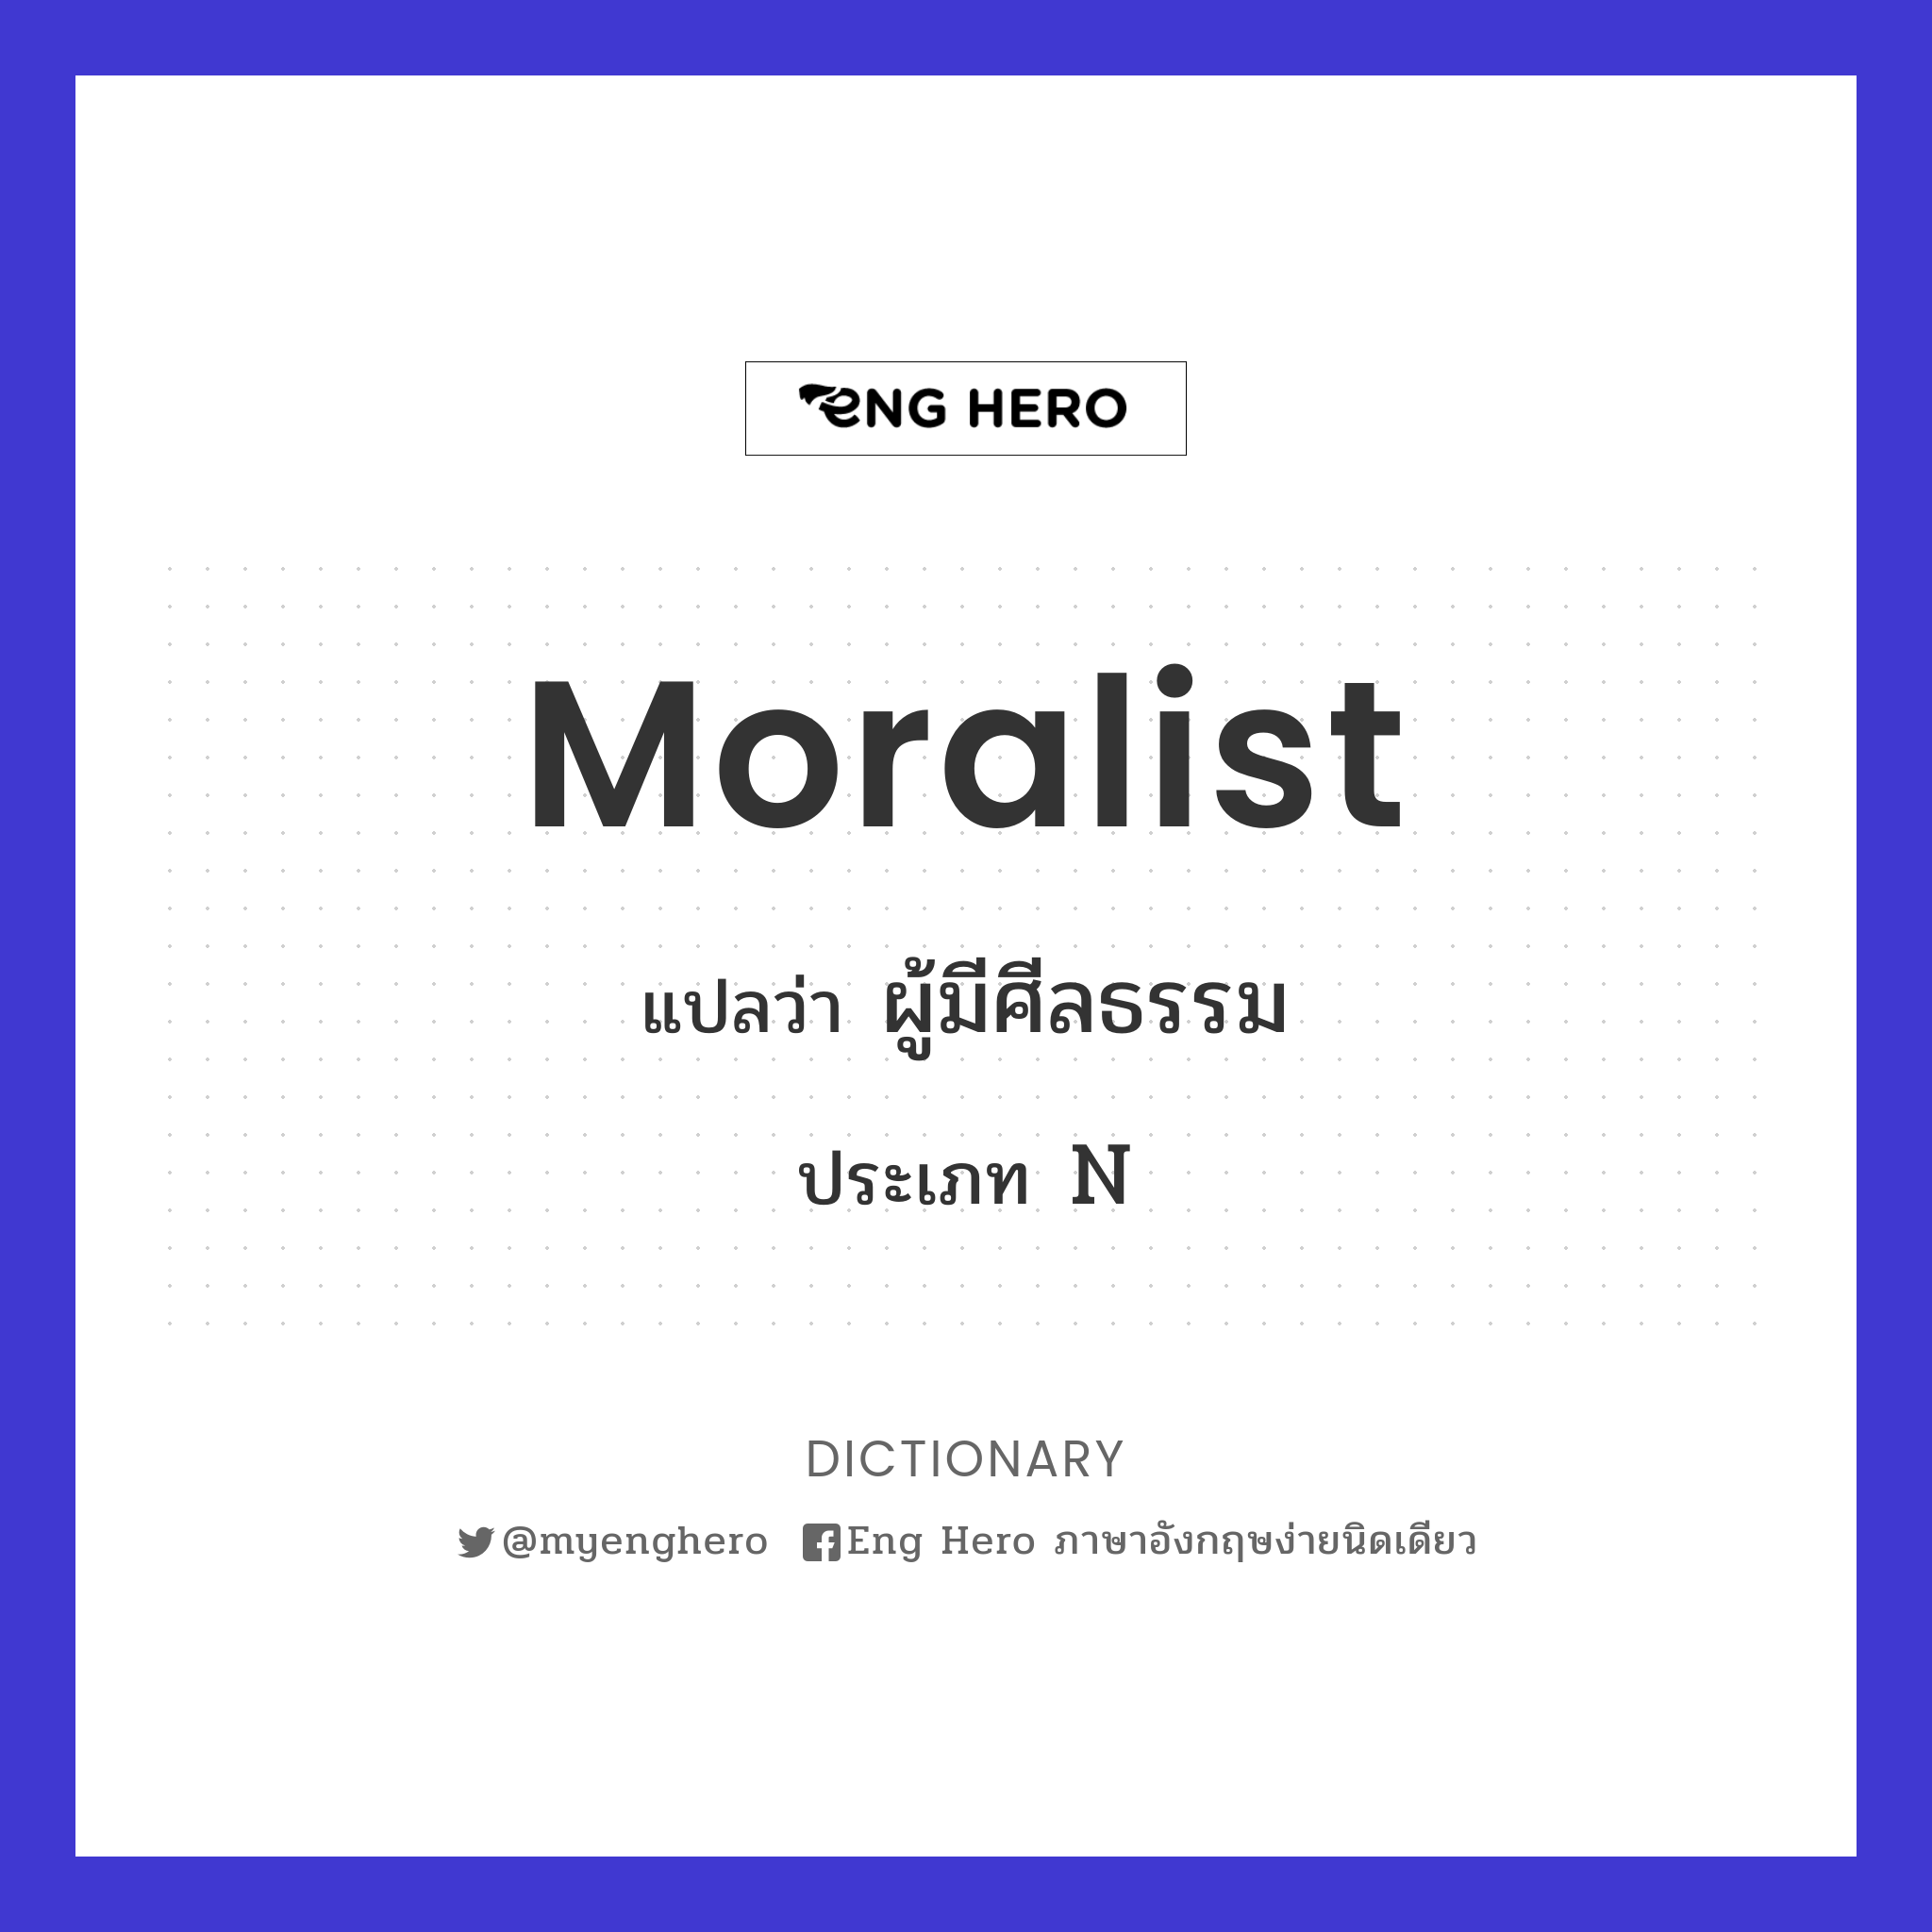 moralist